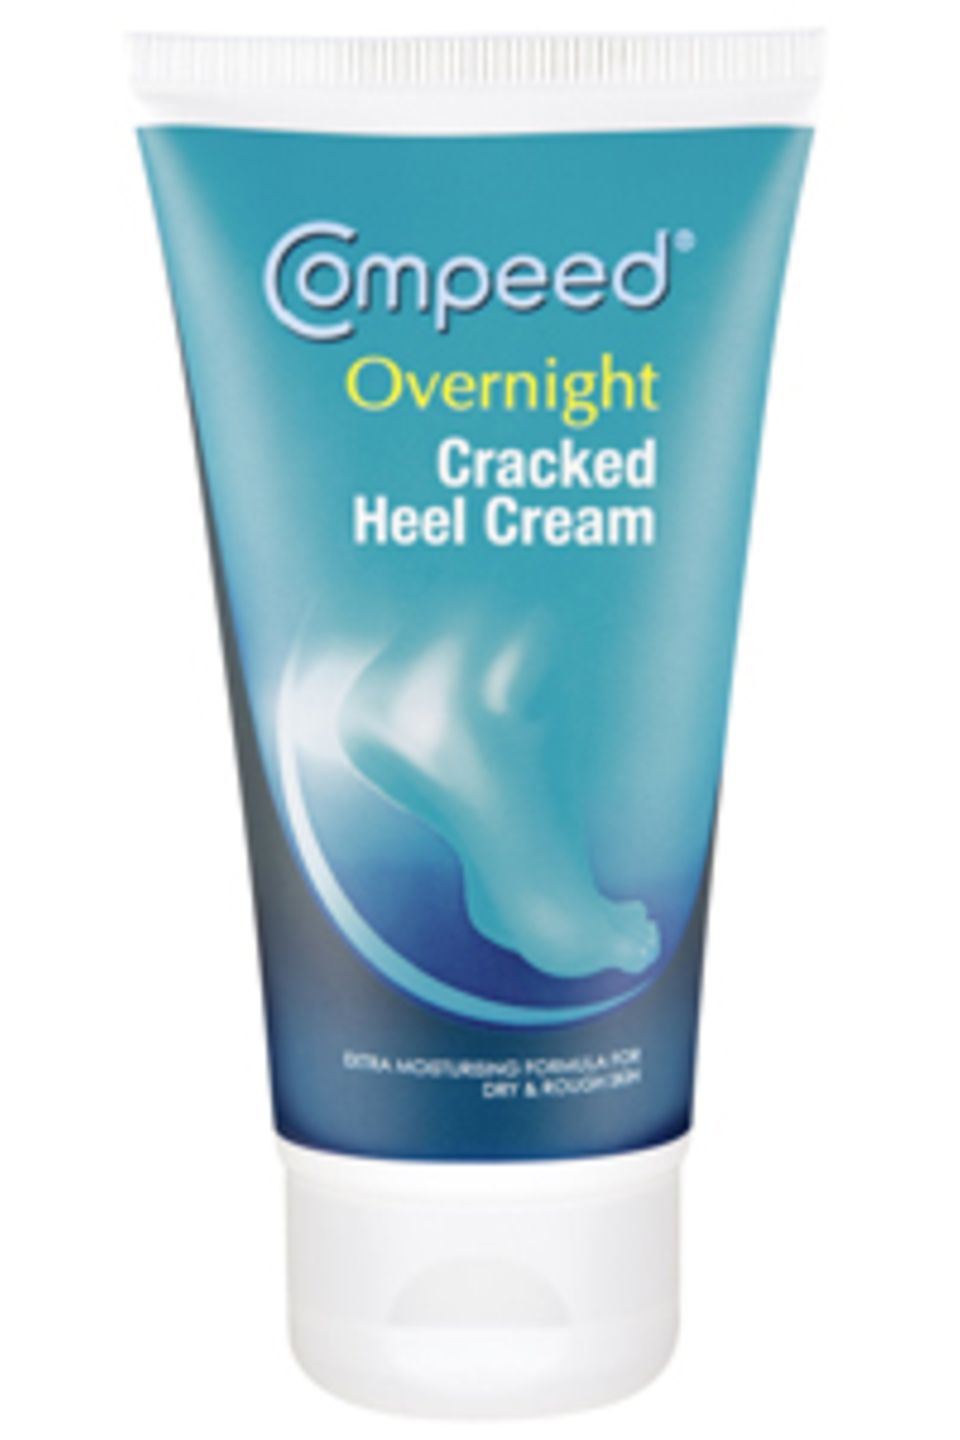 Compeed Crackes Heel Cream um 8 Euro